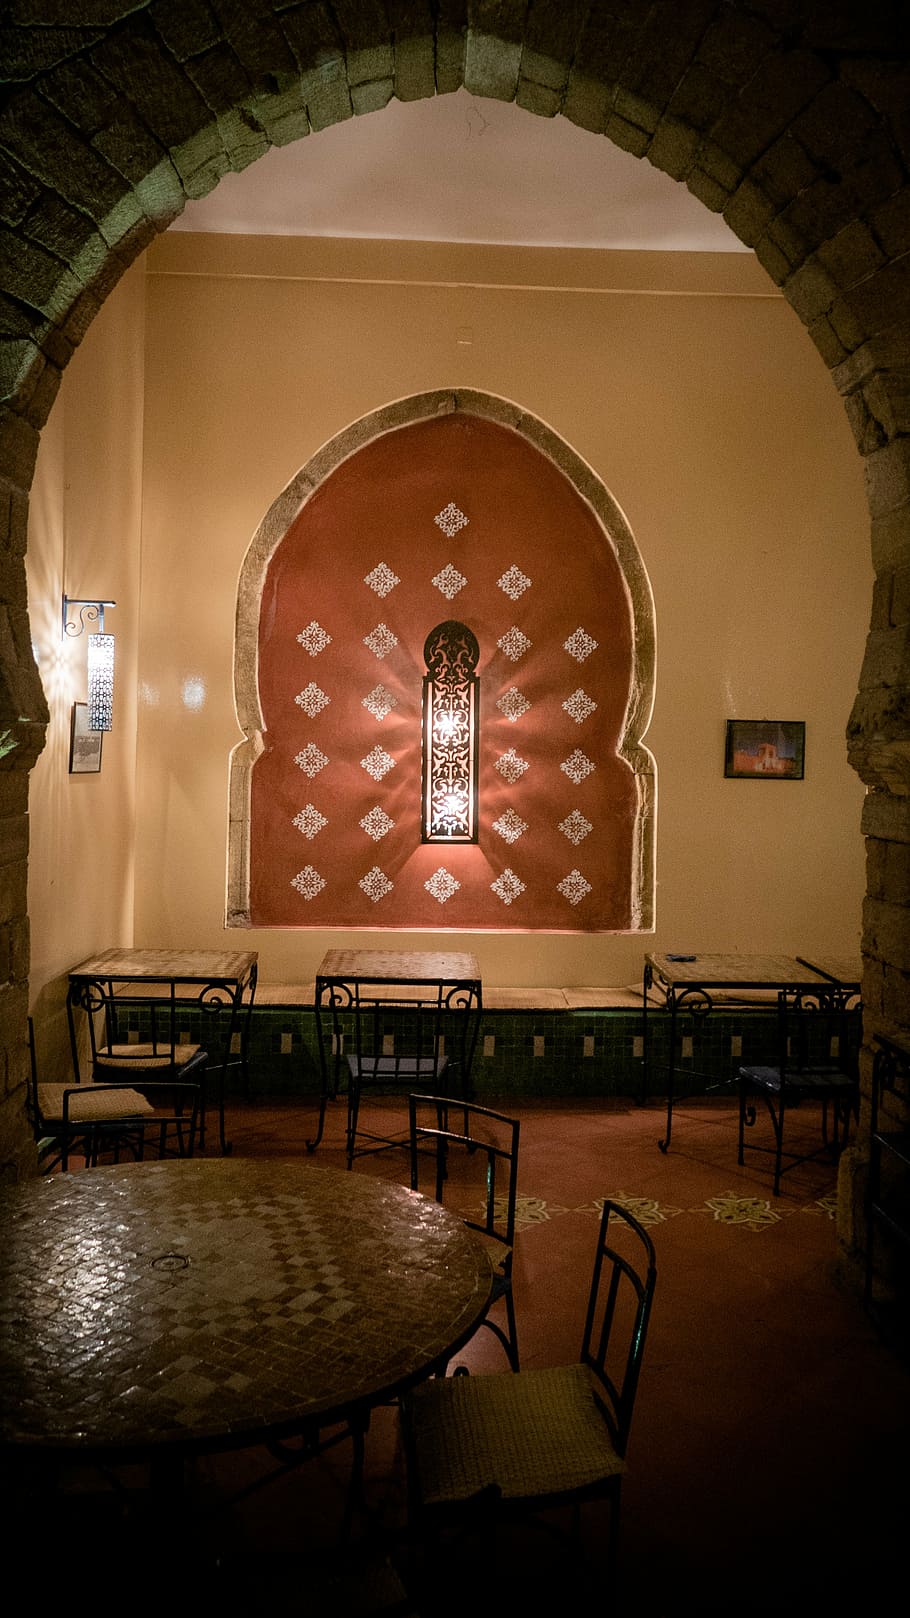 nicho, área de descanso, restaurante, mesas de comedor, decoración de paredes, luz, decoración ligera, árabe, marroquí, arco de pared